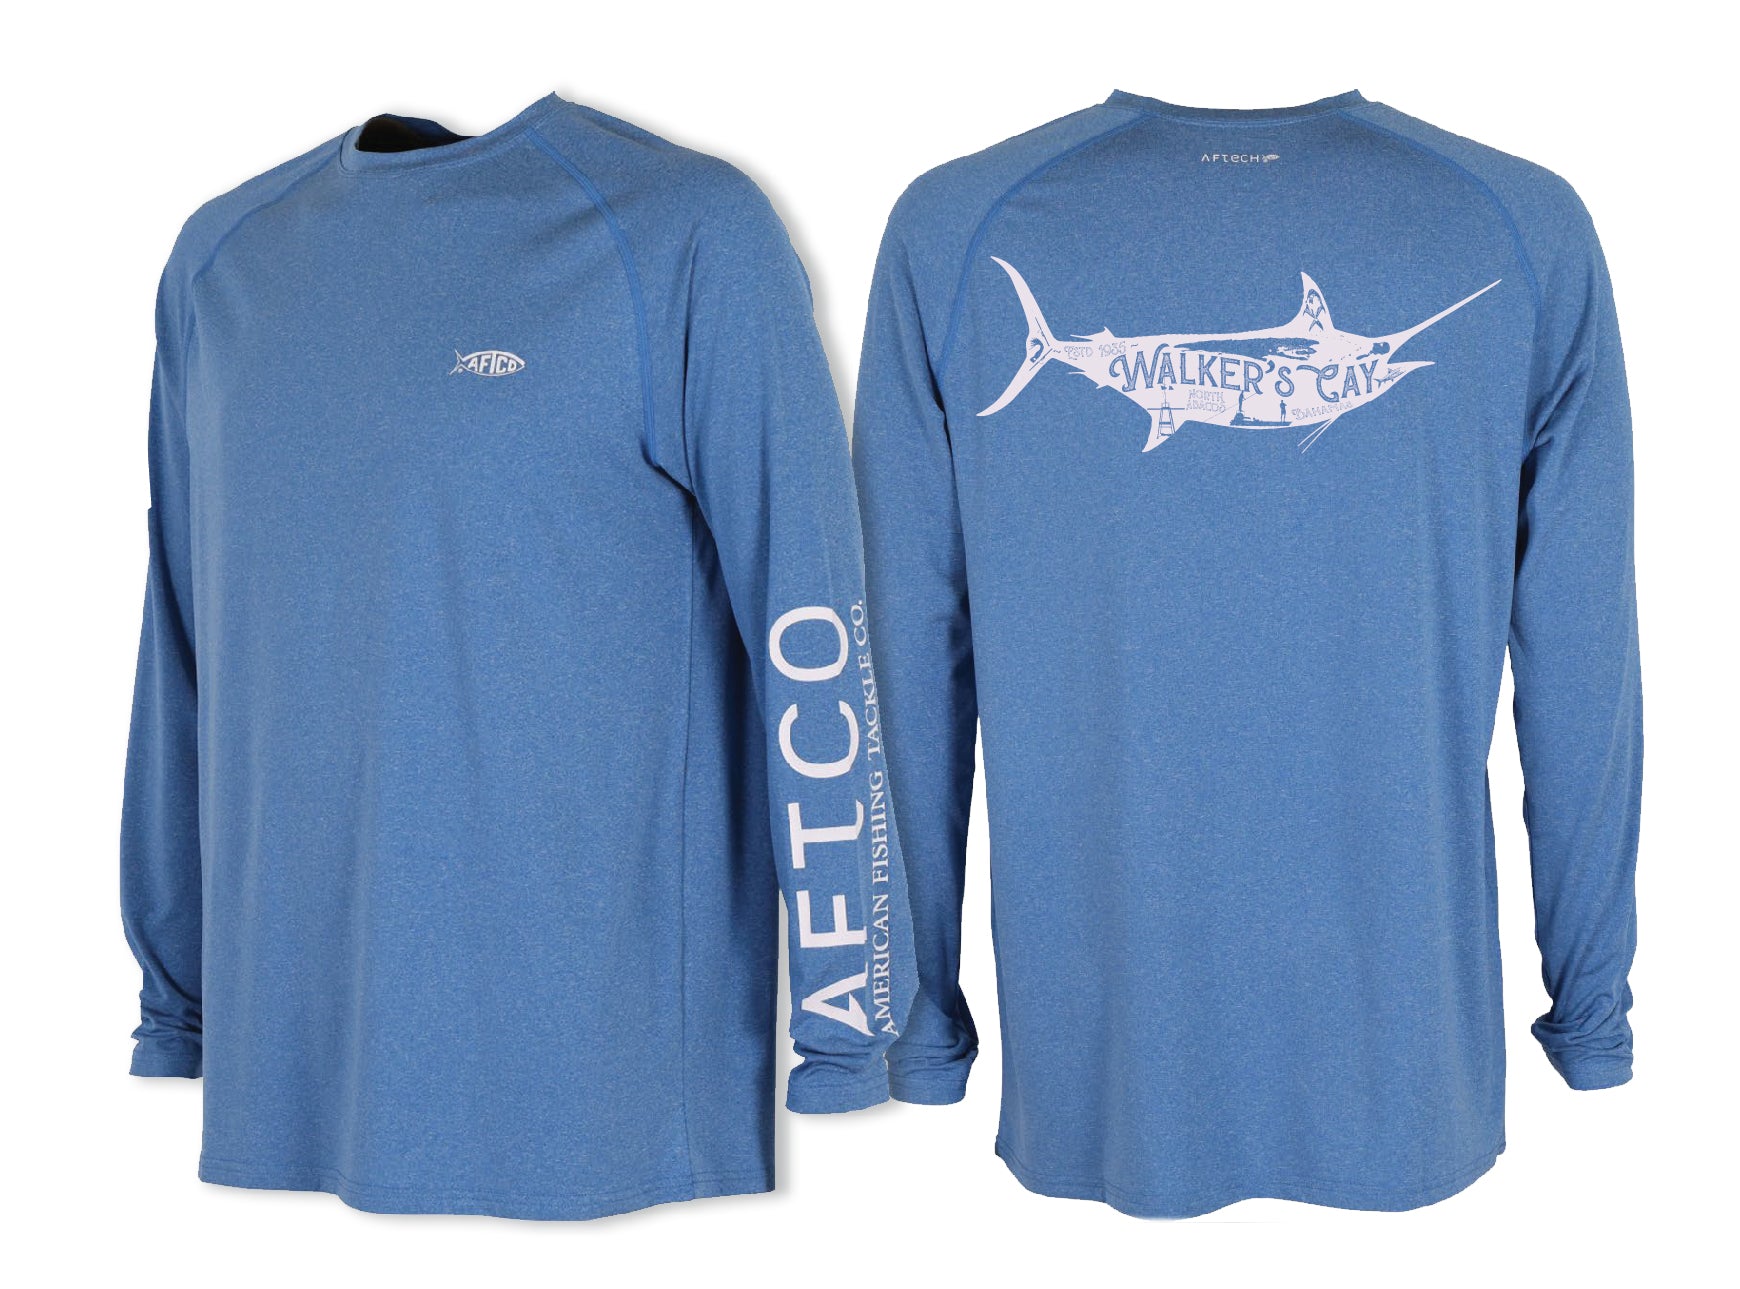 Iconic Marlin - Men's AFTCO Samurai LS Sun Protection Shirt